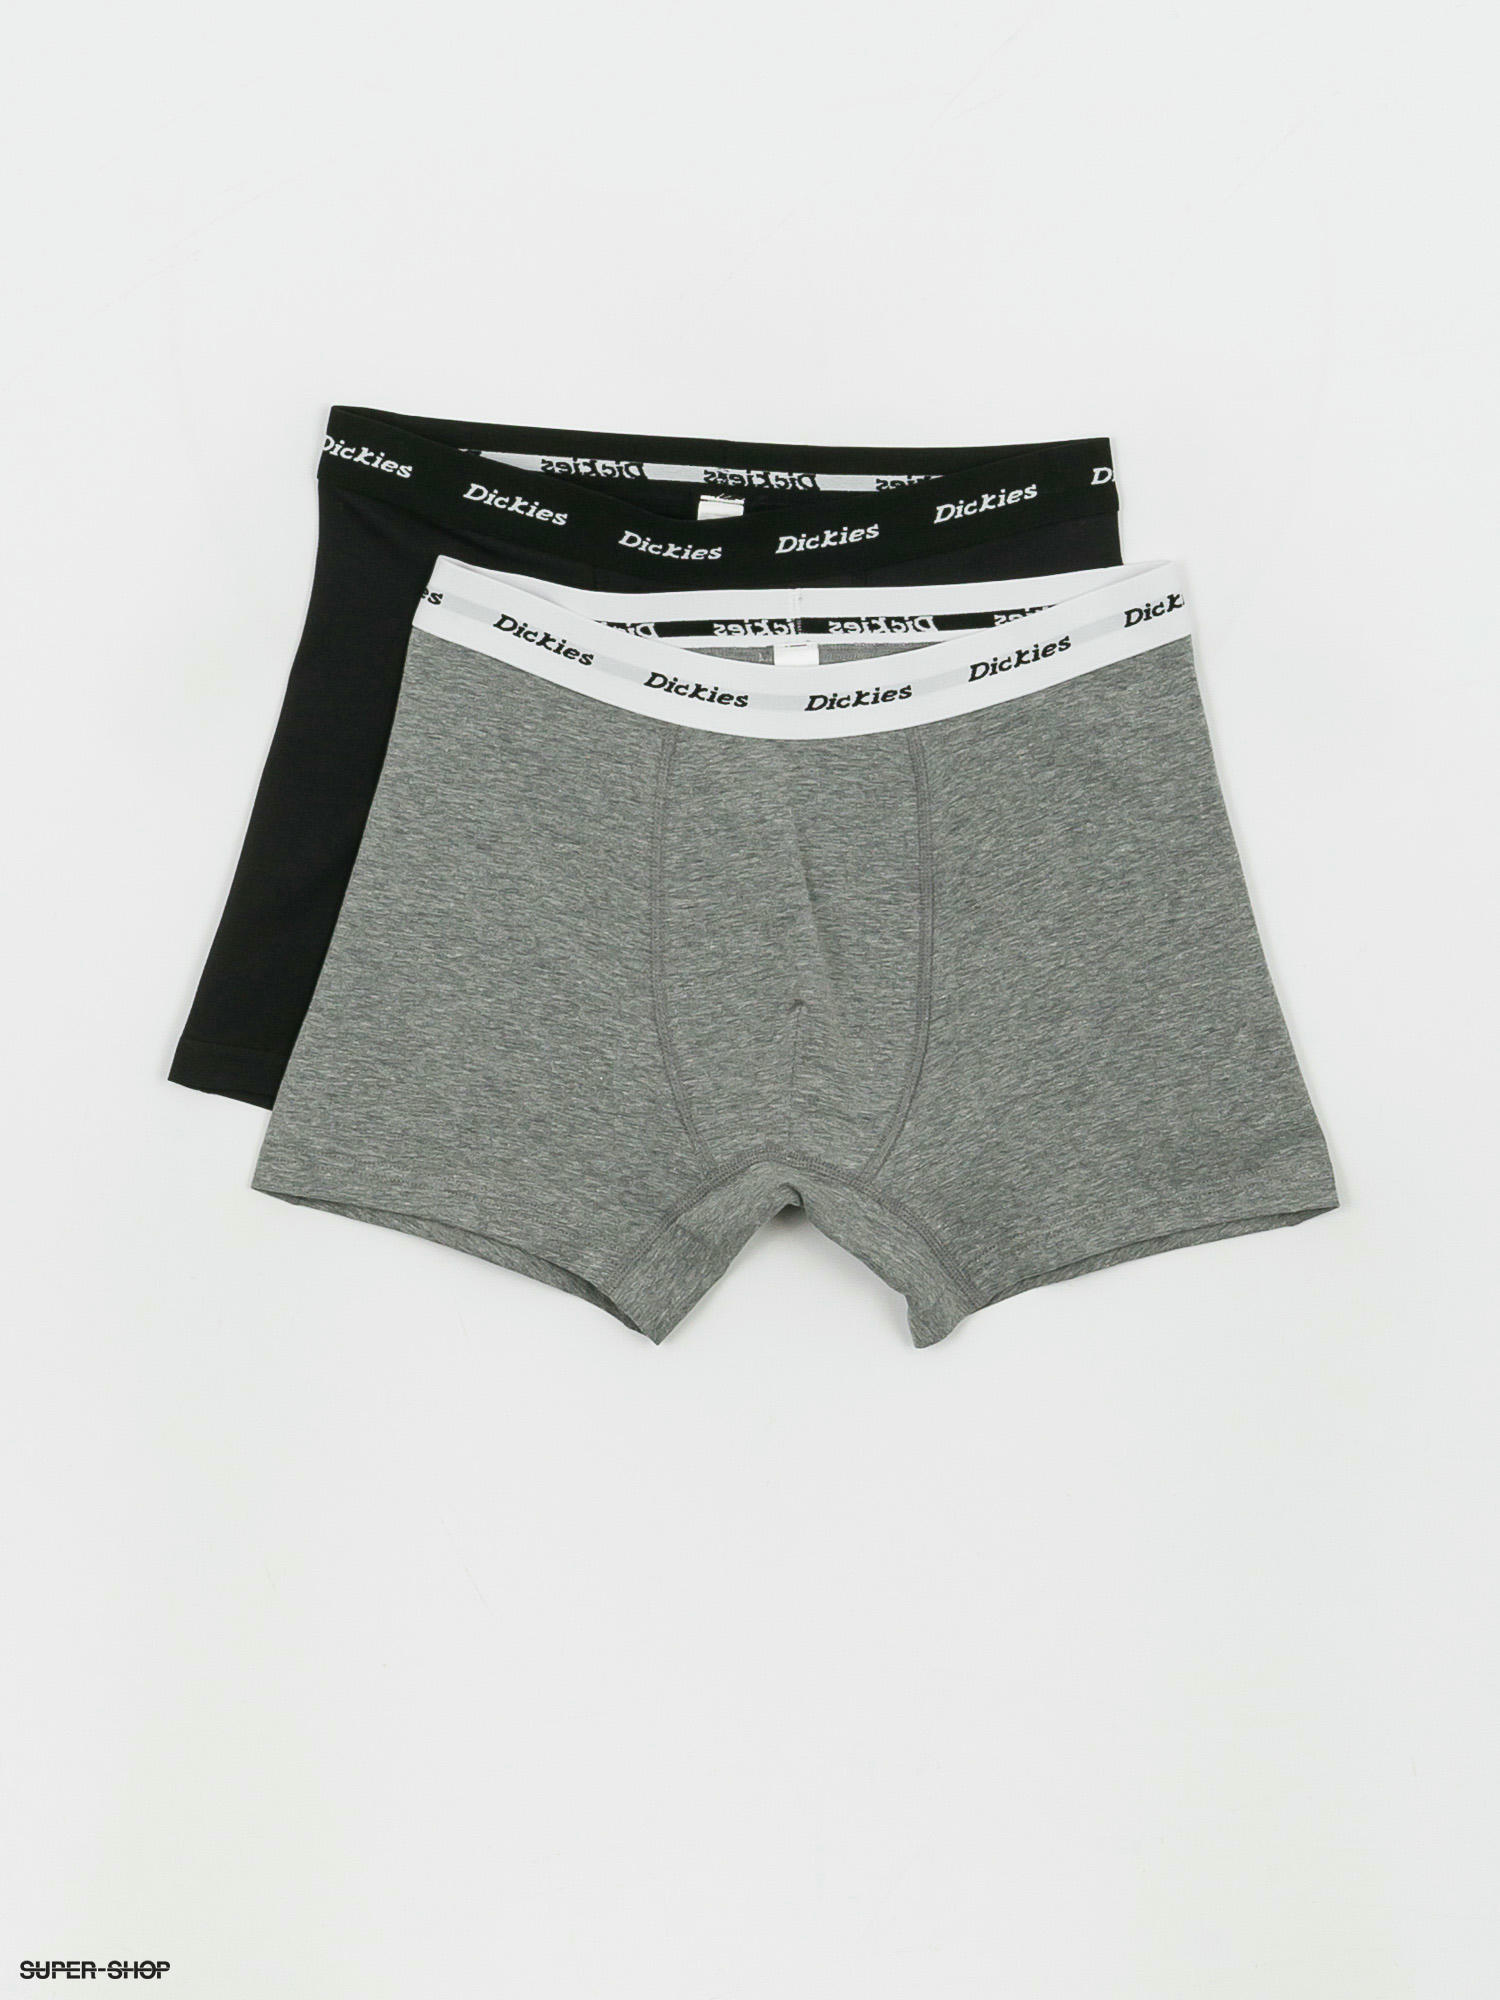 https://static.super-shop.com/1293845-dickies-2-pack-trunks-underwear-assorted-colour.jpg?w=1920